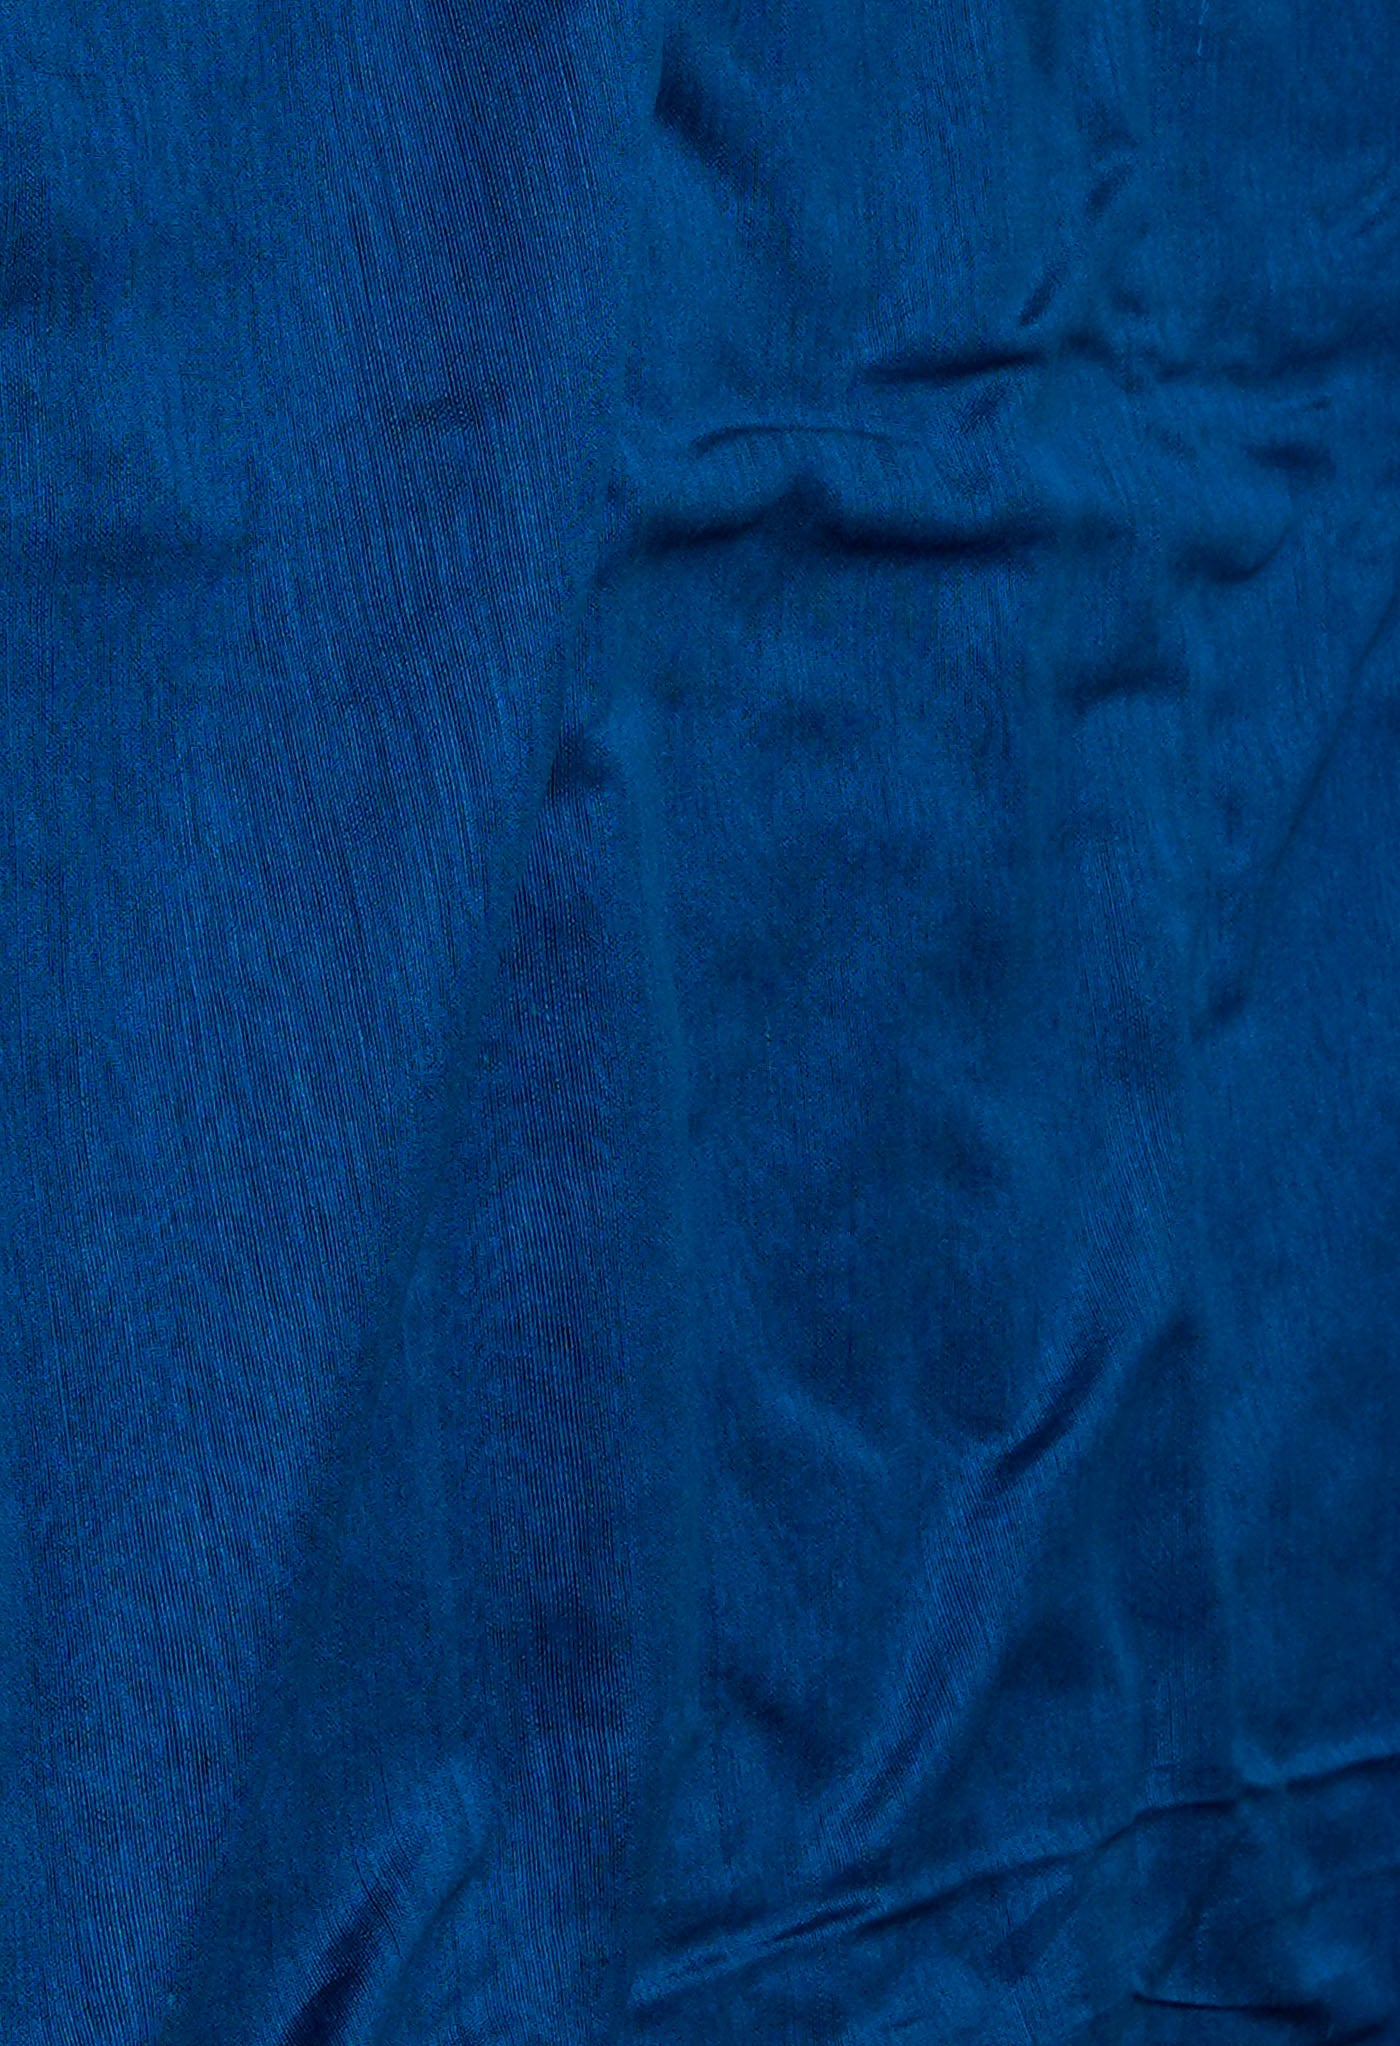 Blue Pure Handloom Dupion Bengal Sico Saree